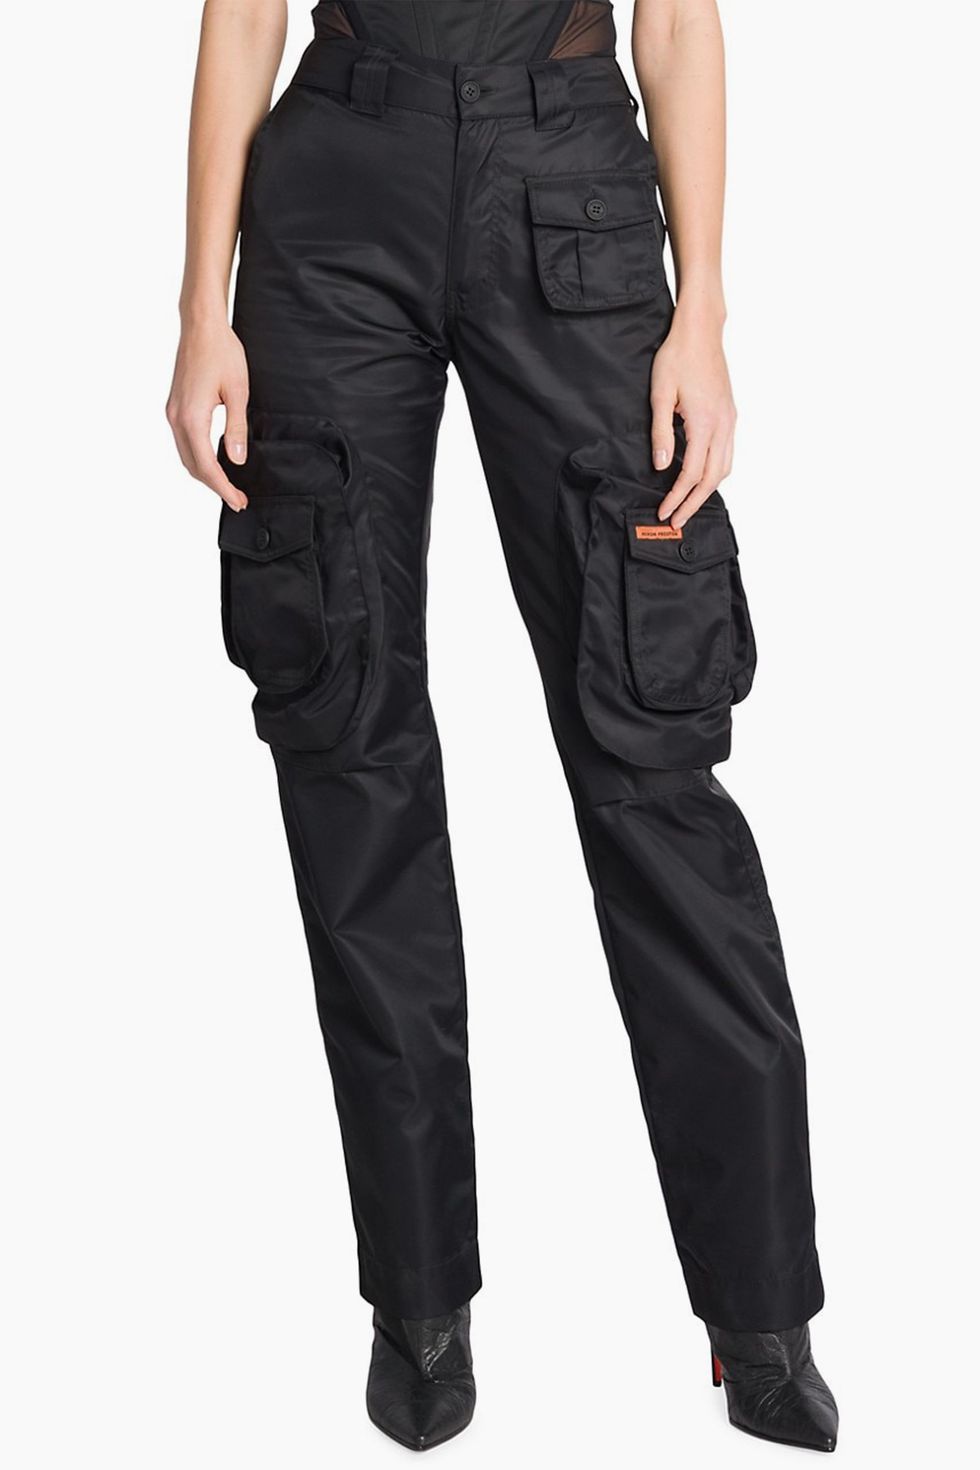 Woman's Trousers Soft Denim Pants Black 6 Pocket Pants For Girls Cargo  Pants New